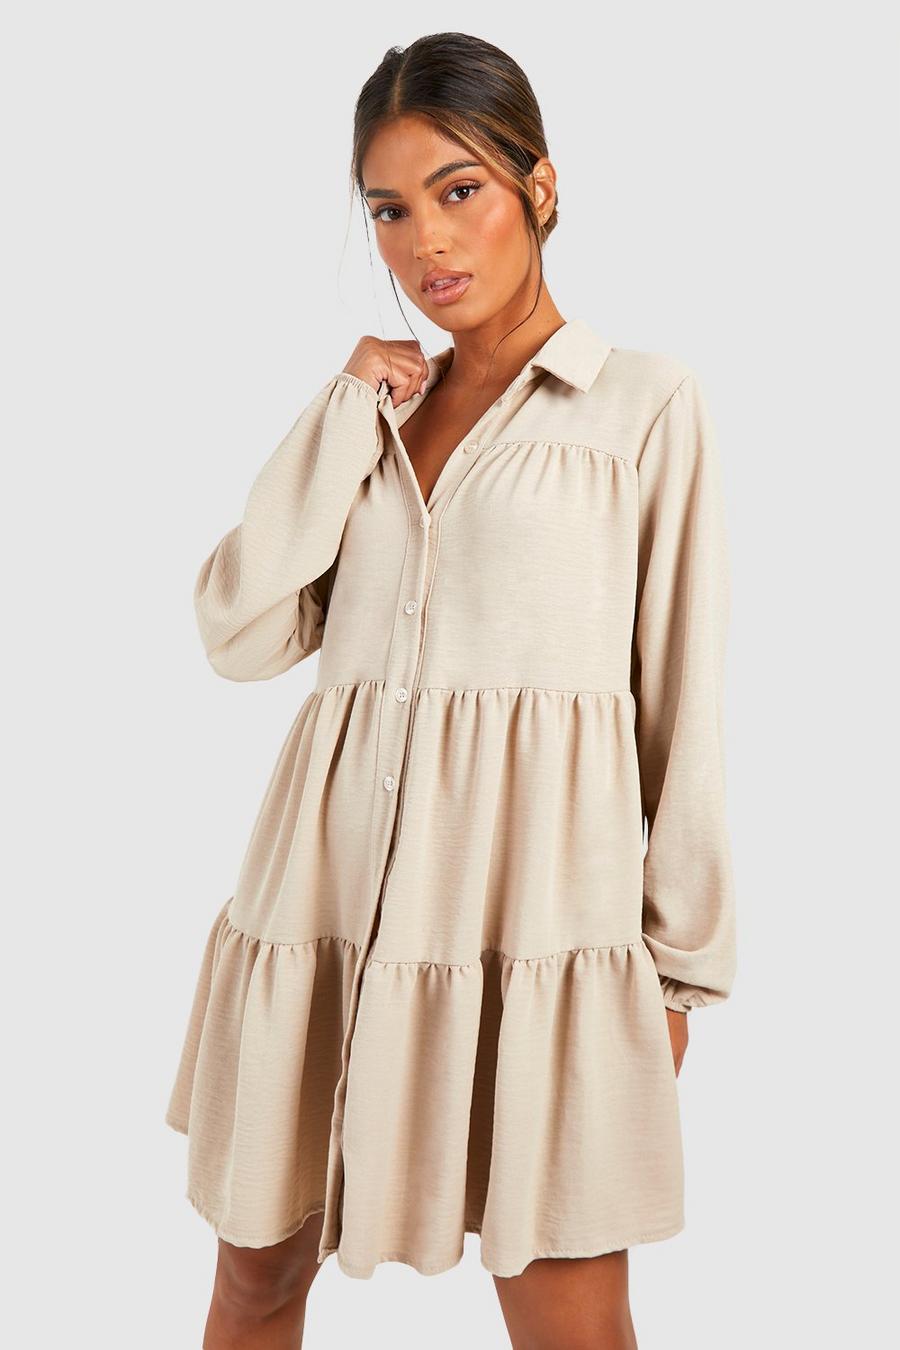 https://media.boohoo.com/i/boohoo/gzz69368_taupe_xl/female-taupe-tiered-smock-shirt-dress/?w=900&qlt=default&fmt.jp2.qlt=70&fmt=auto&sm=fit